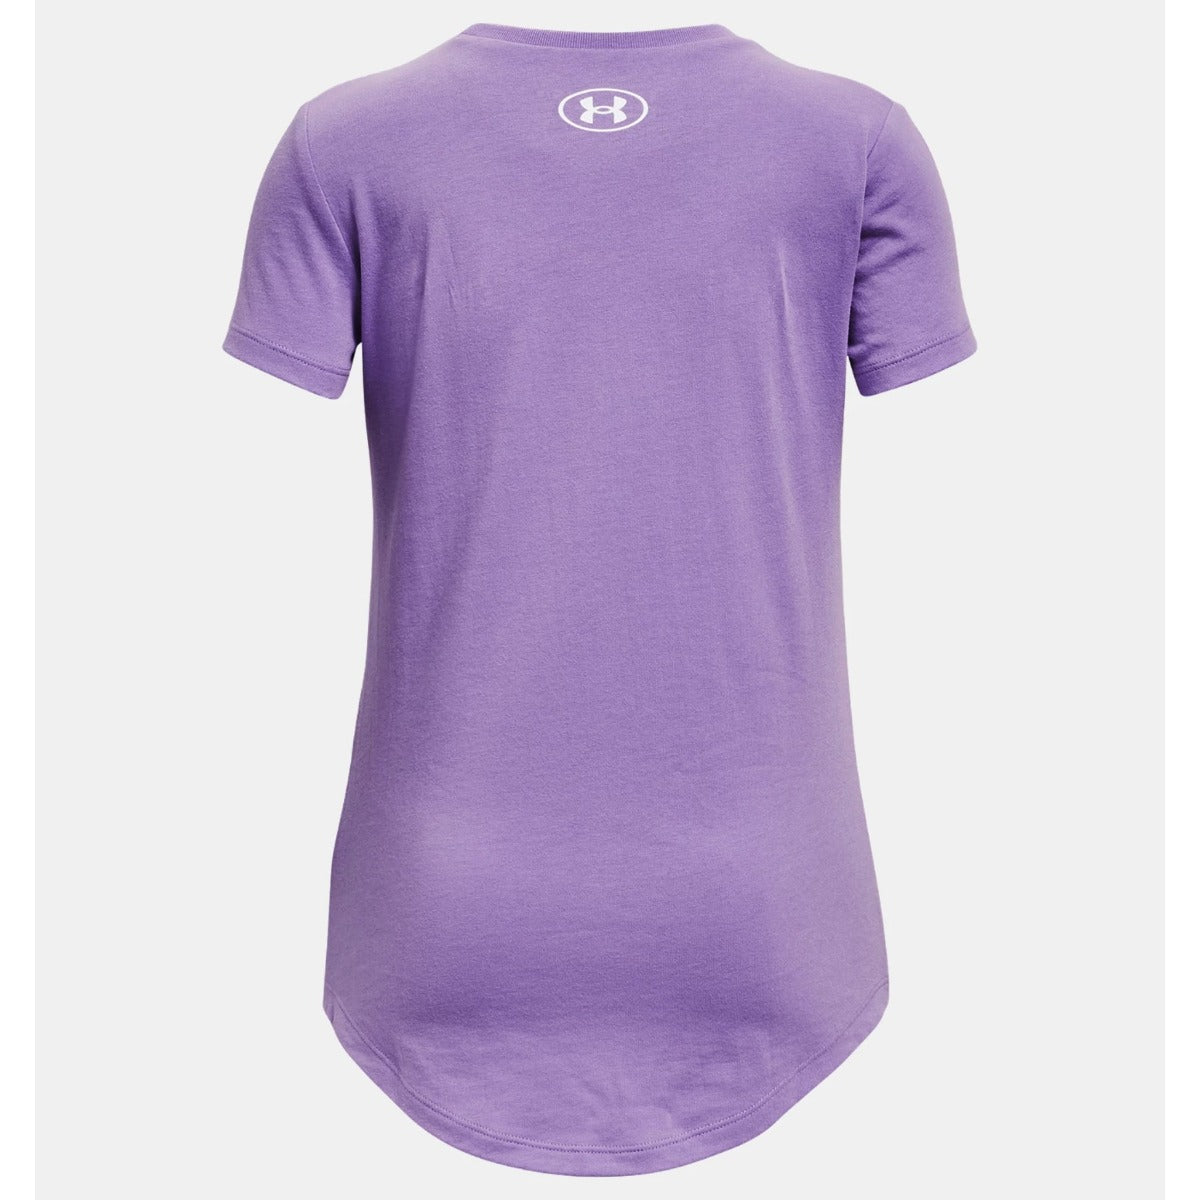 Under Armour Sportstyle Graphic T-Shirt Girls (Purple 560)